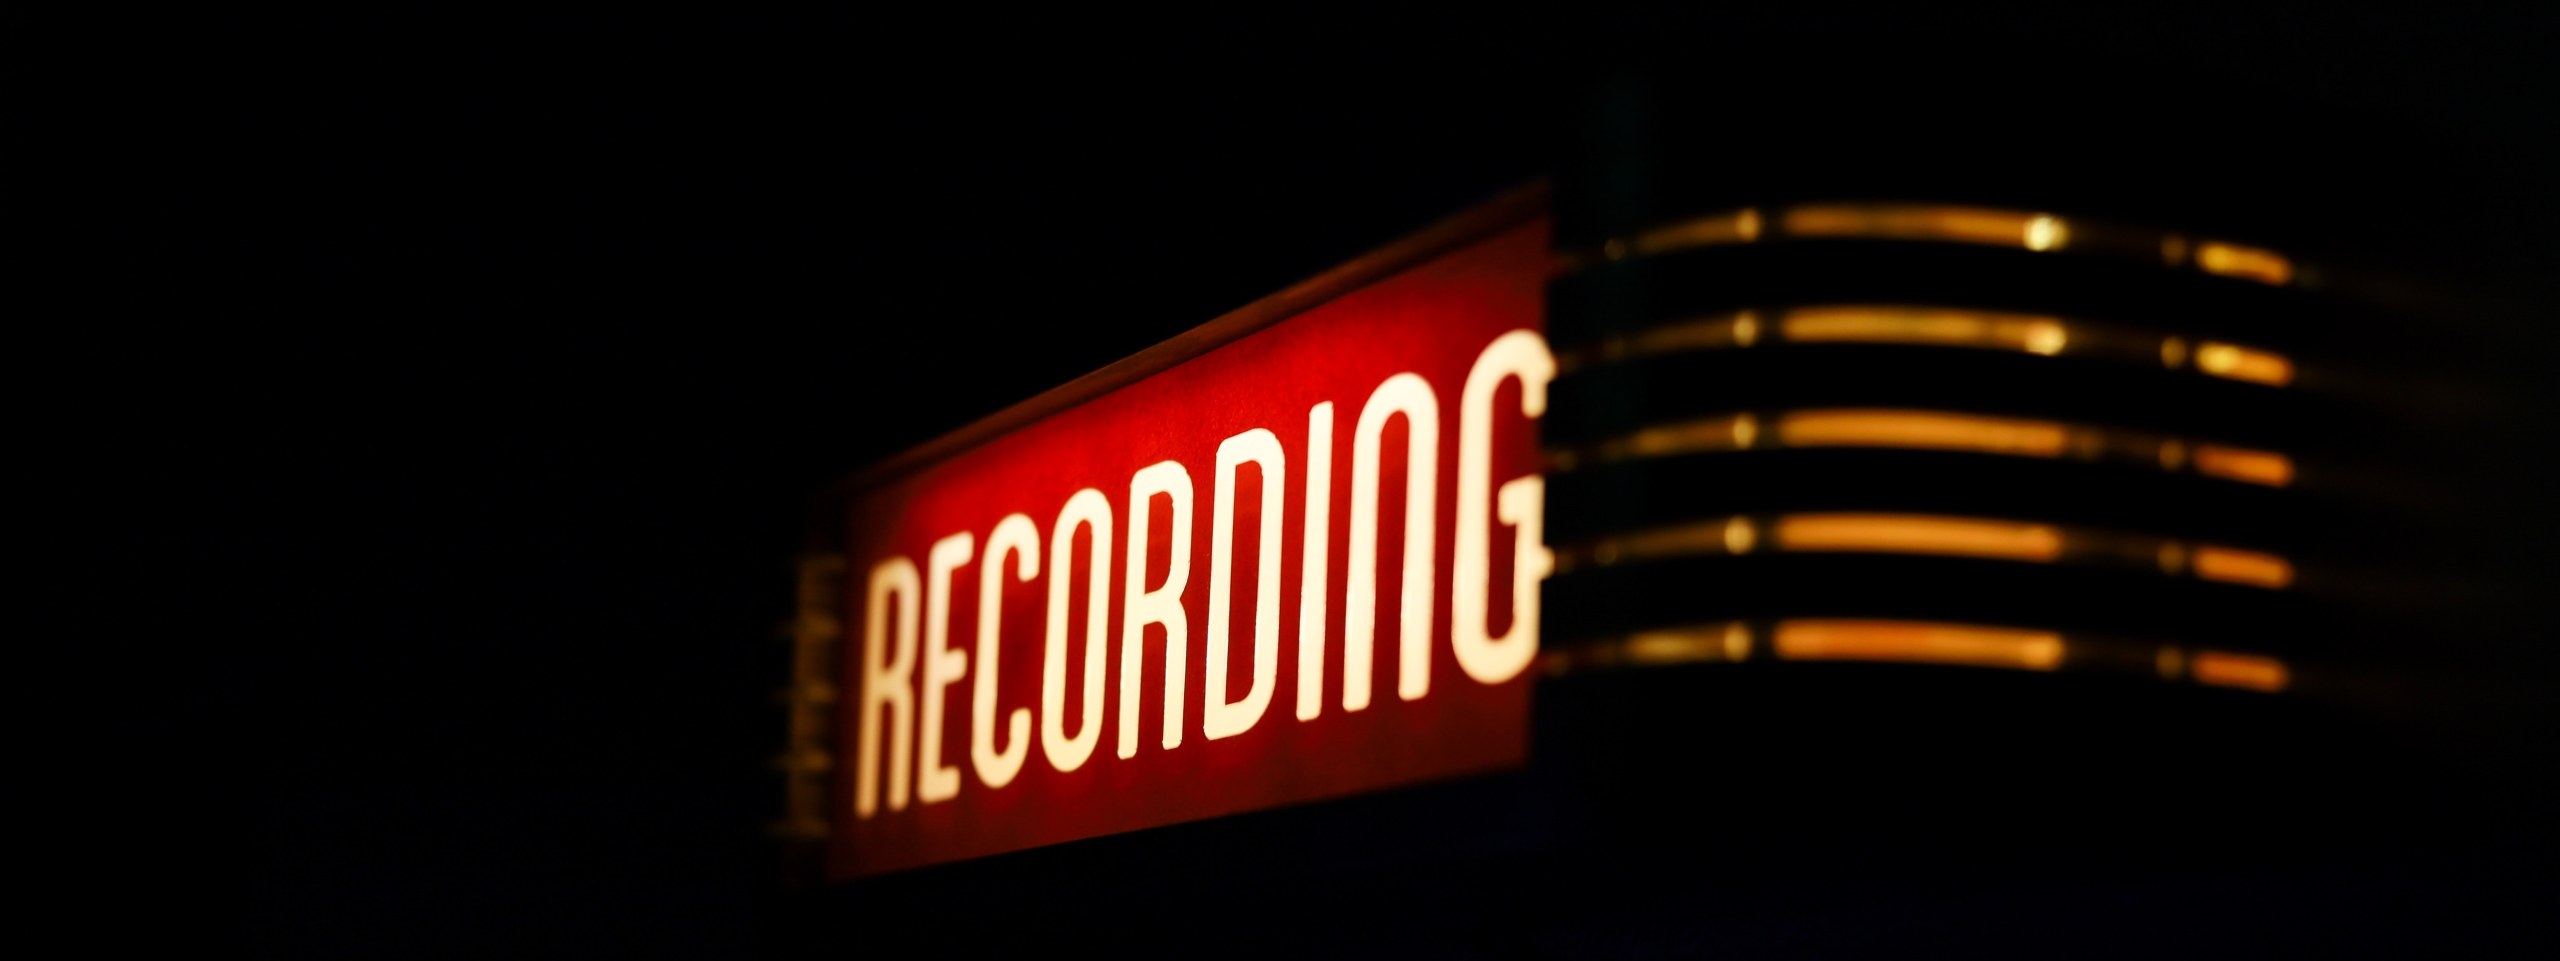 recording studio voice over